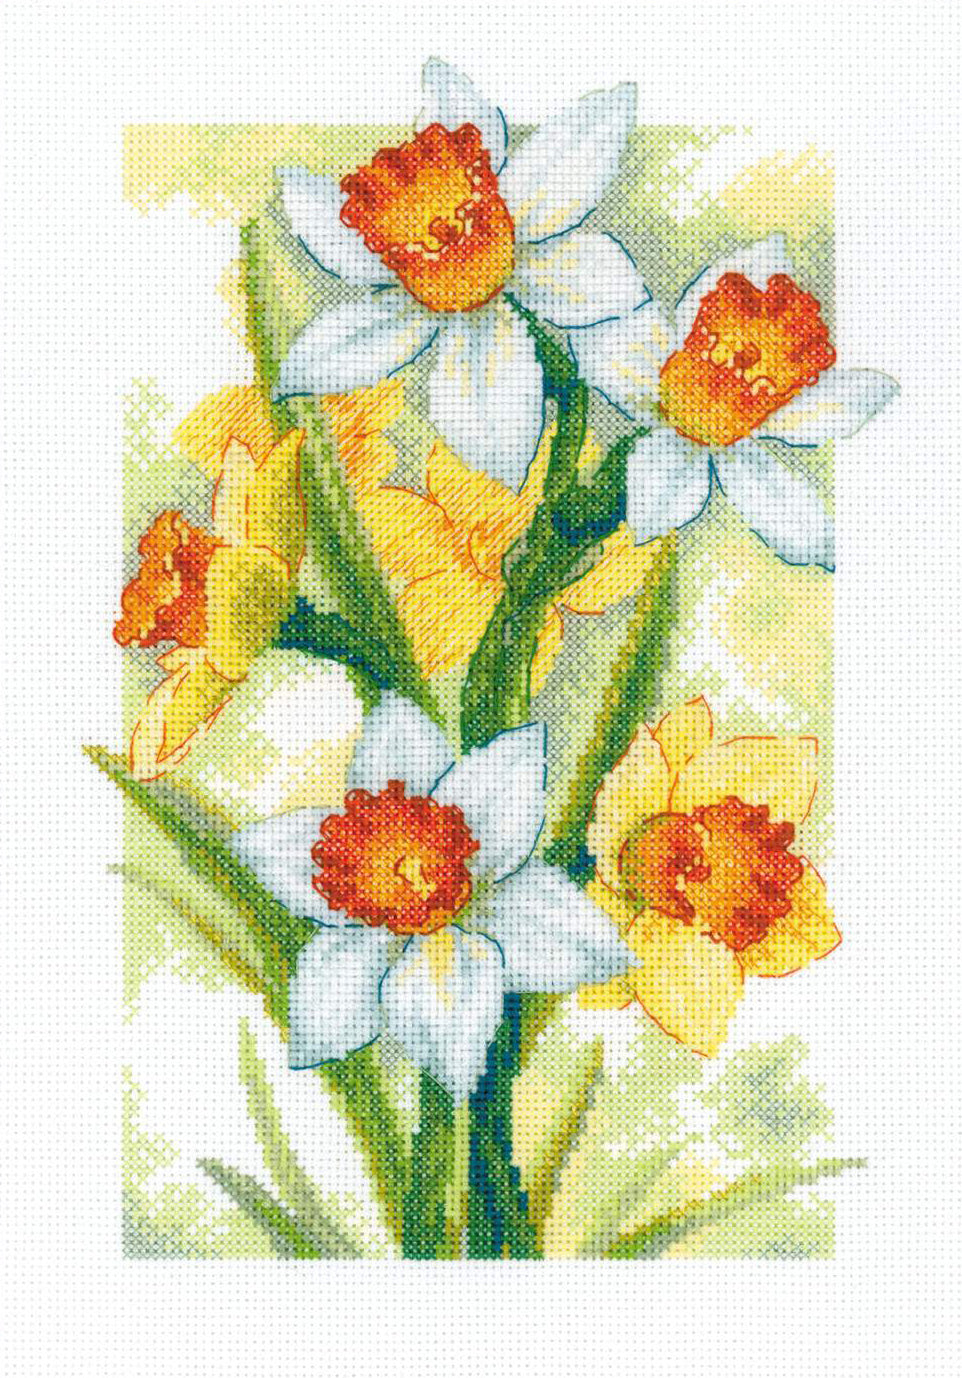 Kit de Bordado de Punto de Cruz - "Spring Glow. Daffodils" - Riolis 2189